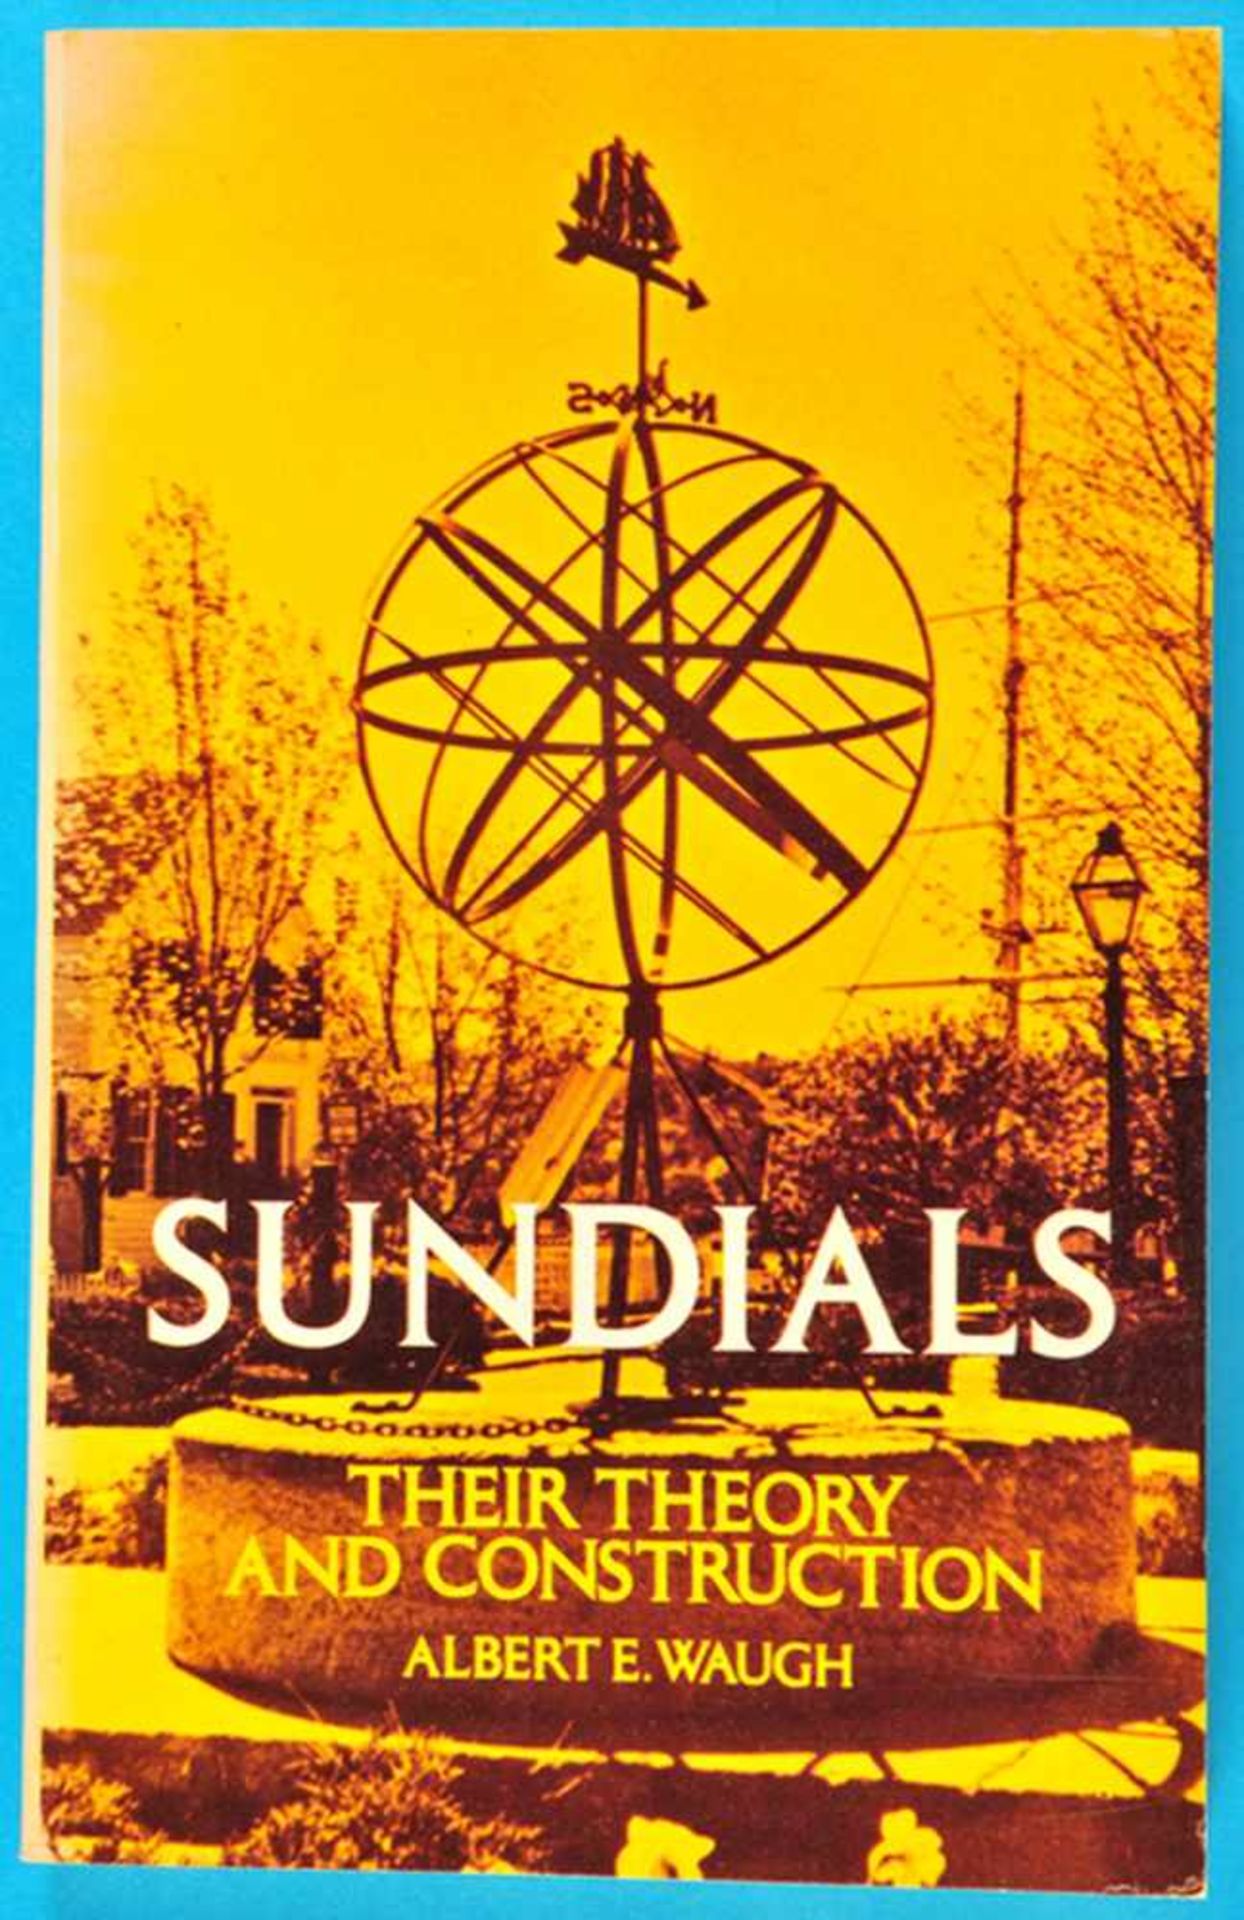 Albert E.Waugh, Sundials, Their Theory and Construction, 1973